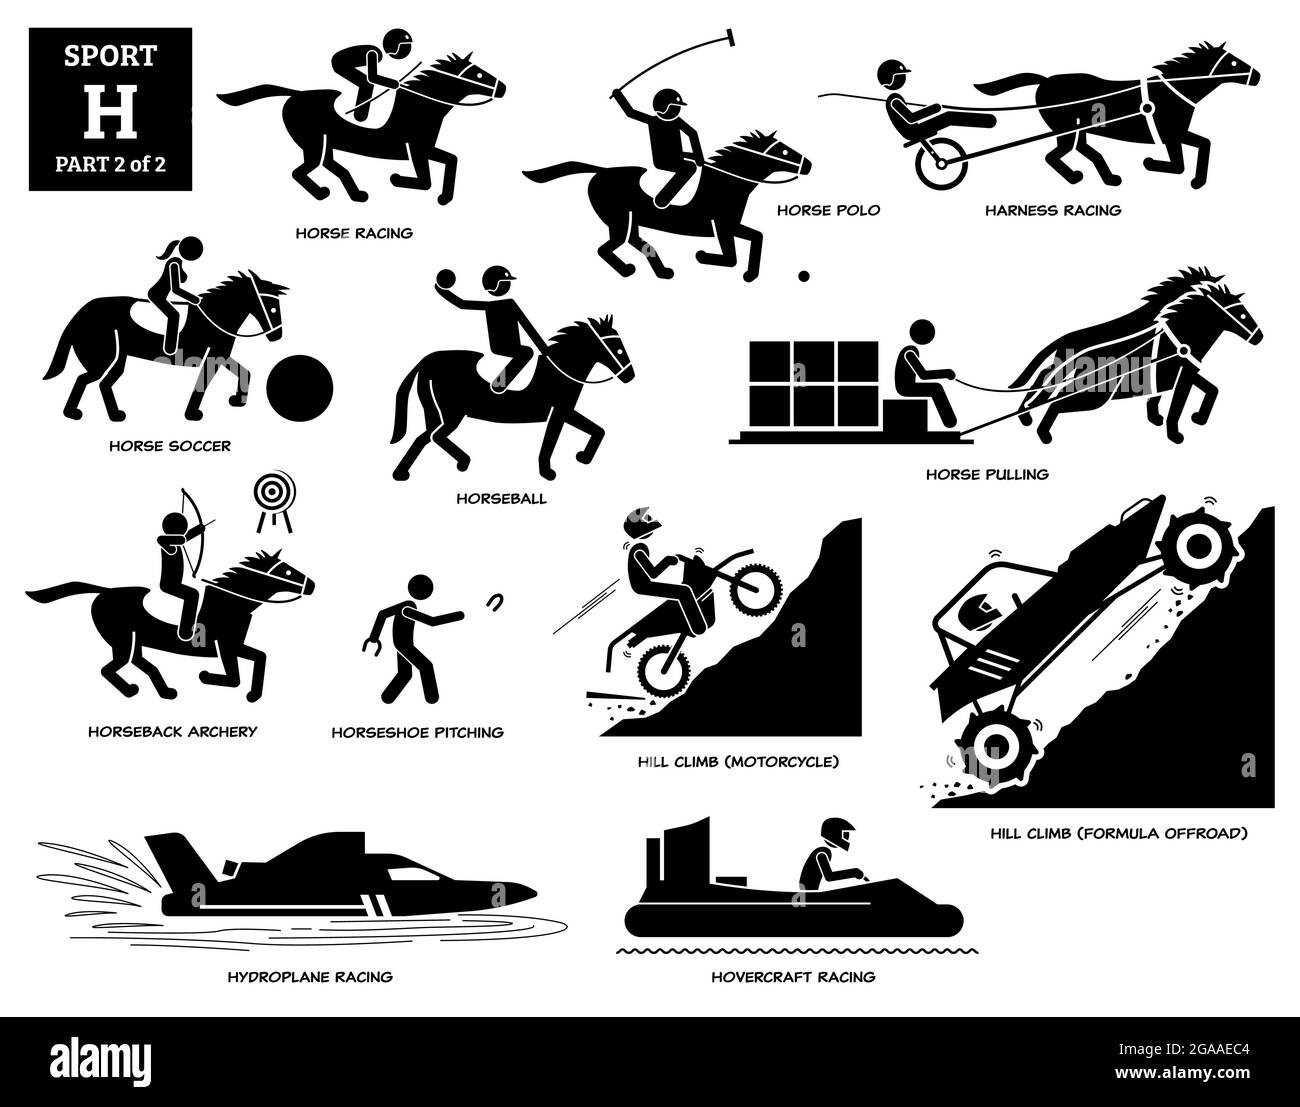 Sport games alphabet H vector icons pictogram. Horse racing, polo, soccer, harness racing, horseball, horseback archery, pitching, hill climb motorcyc Stock Vector